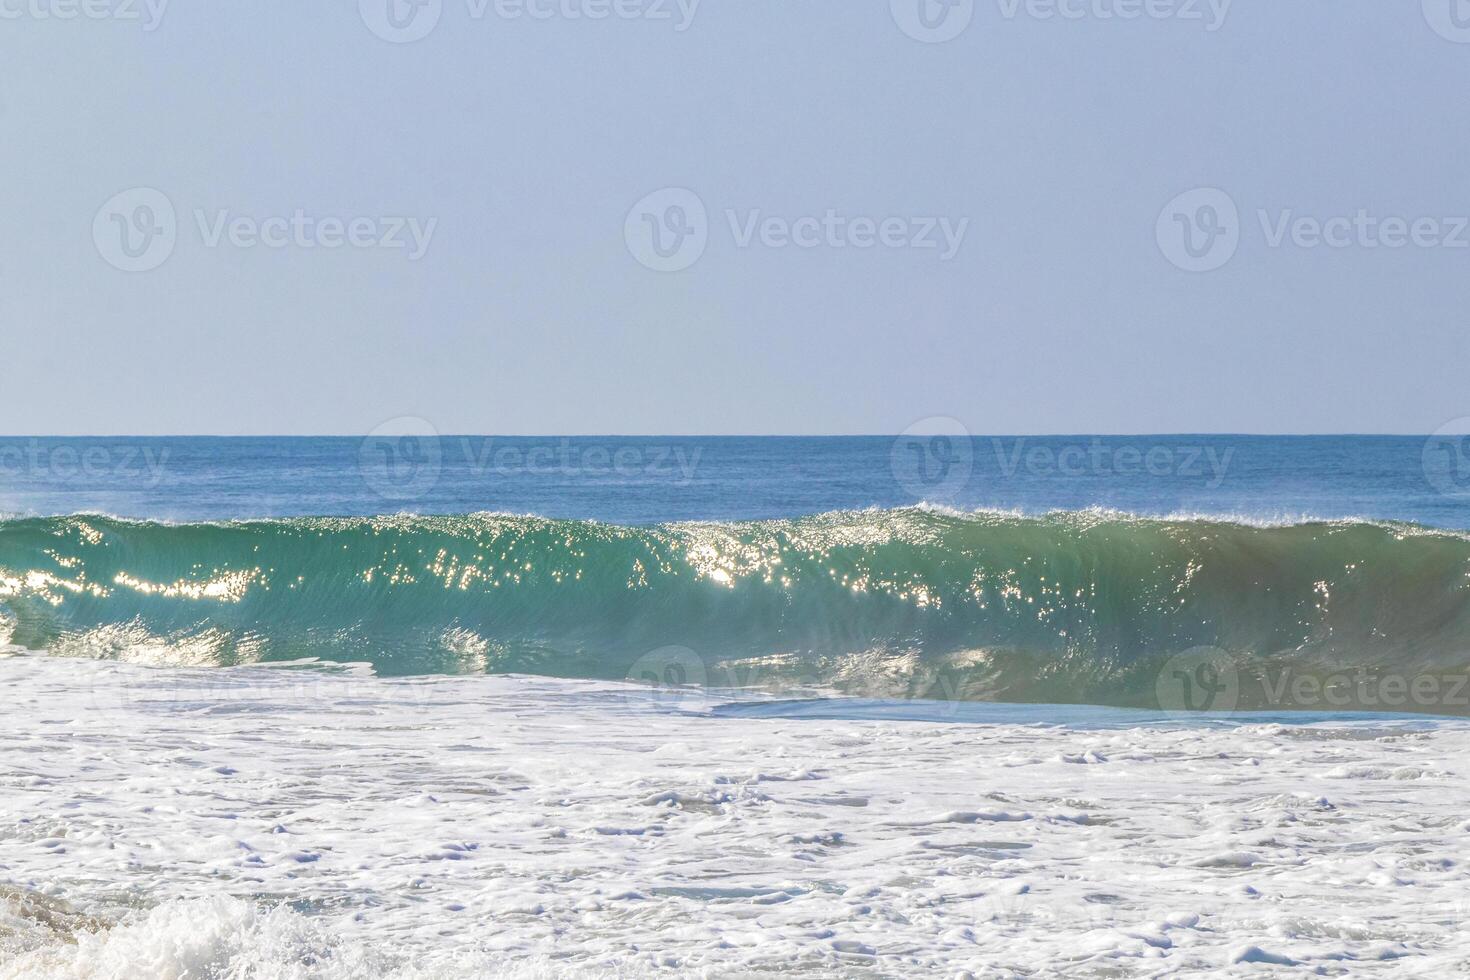 extreem reusachtig groot surfer golven Bij strand puerto escondido Mexico. foto